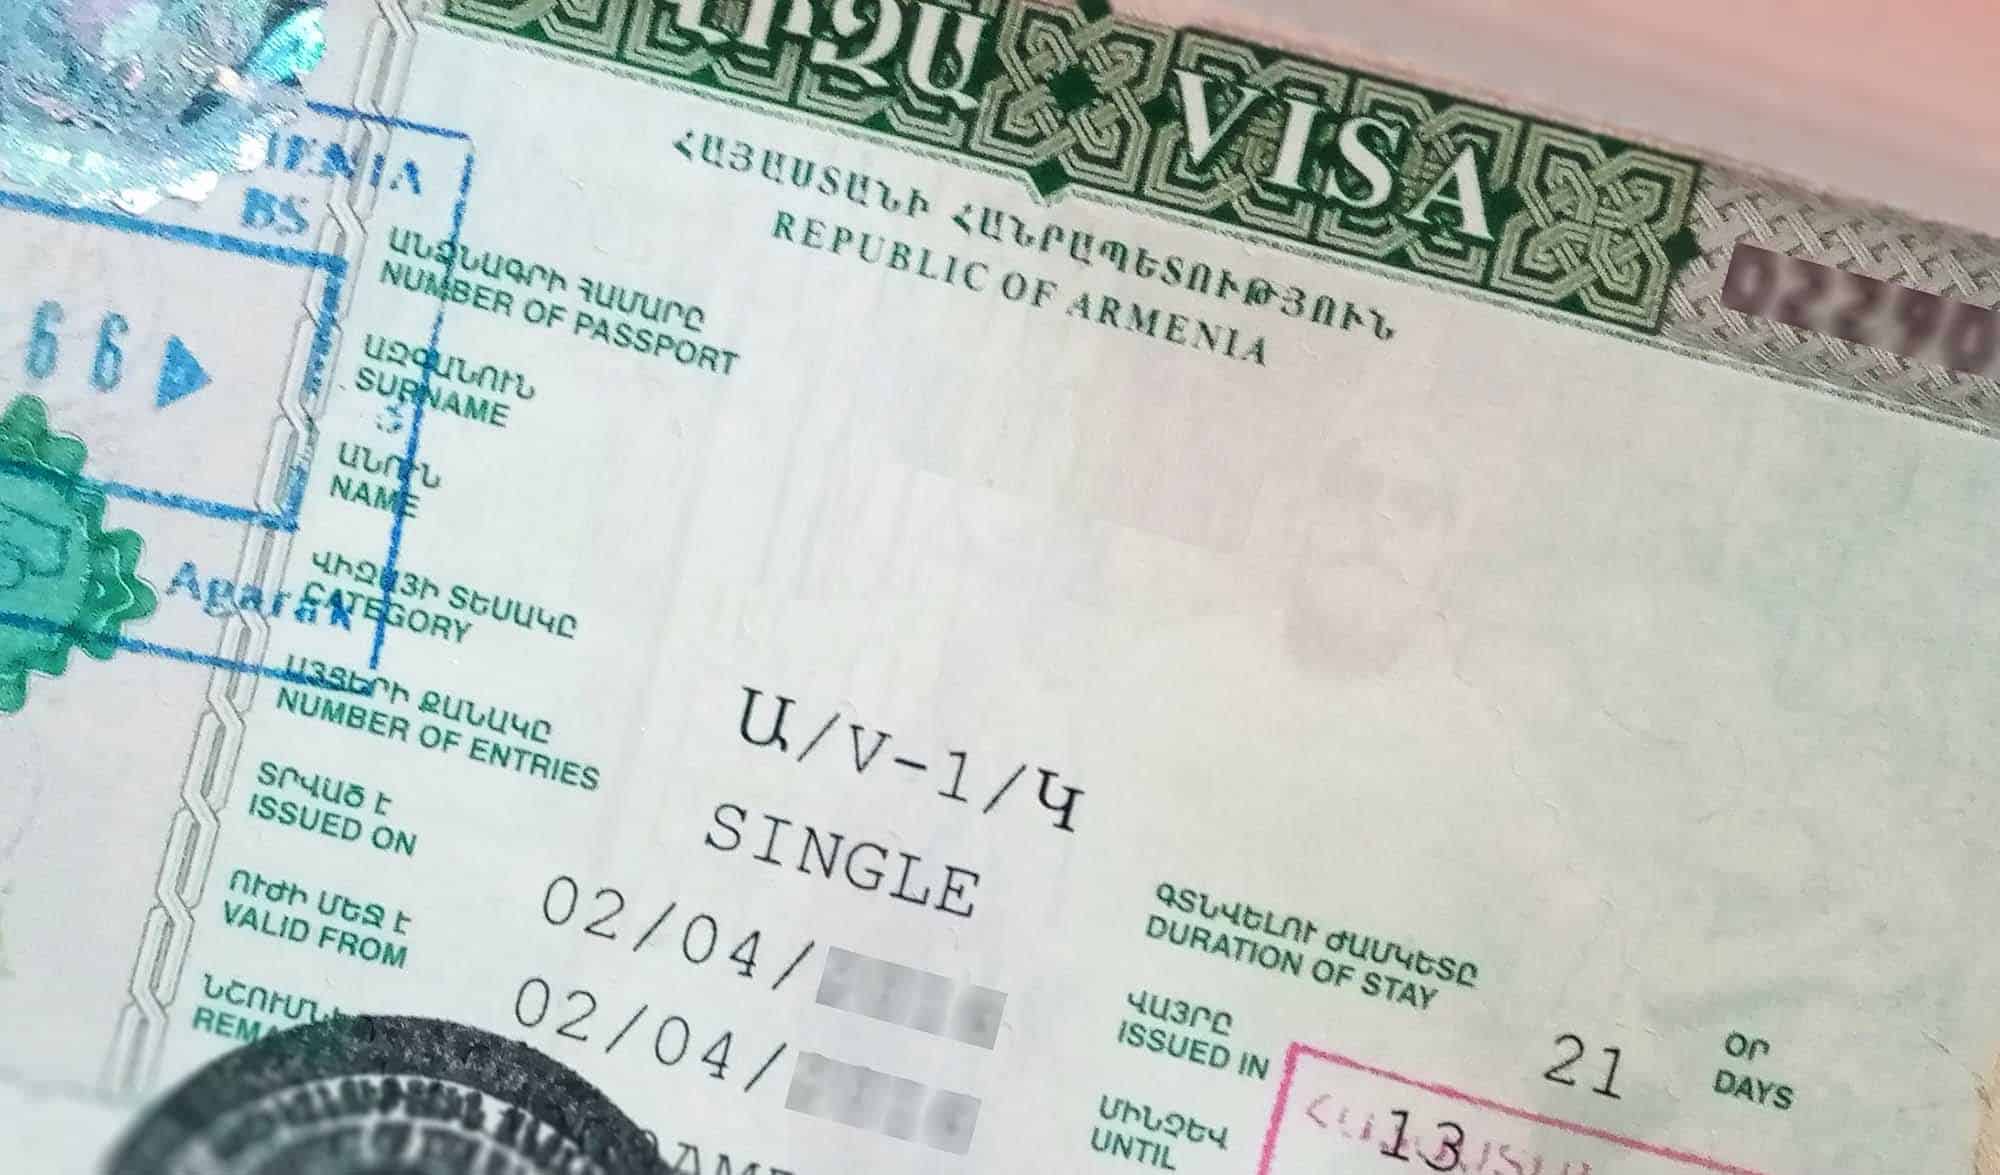 armenia tourist visa online application